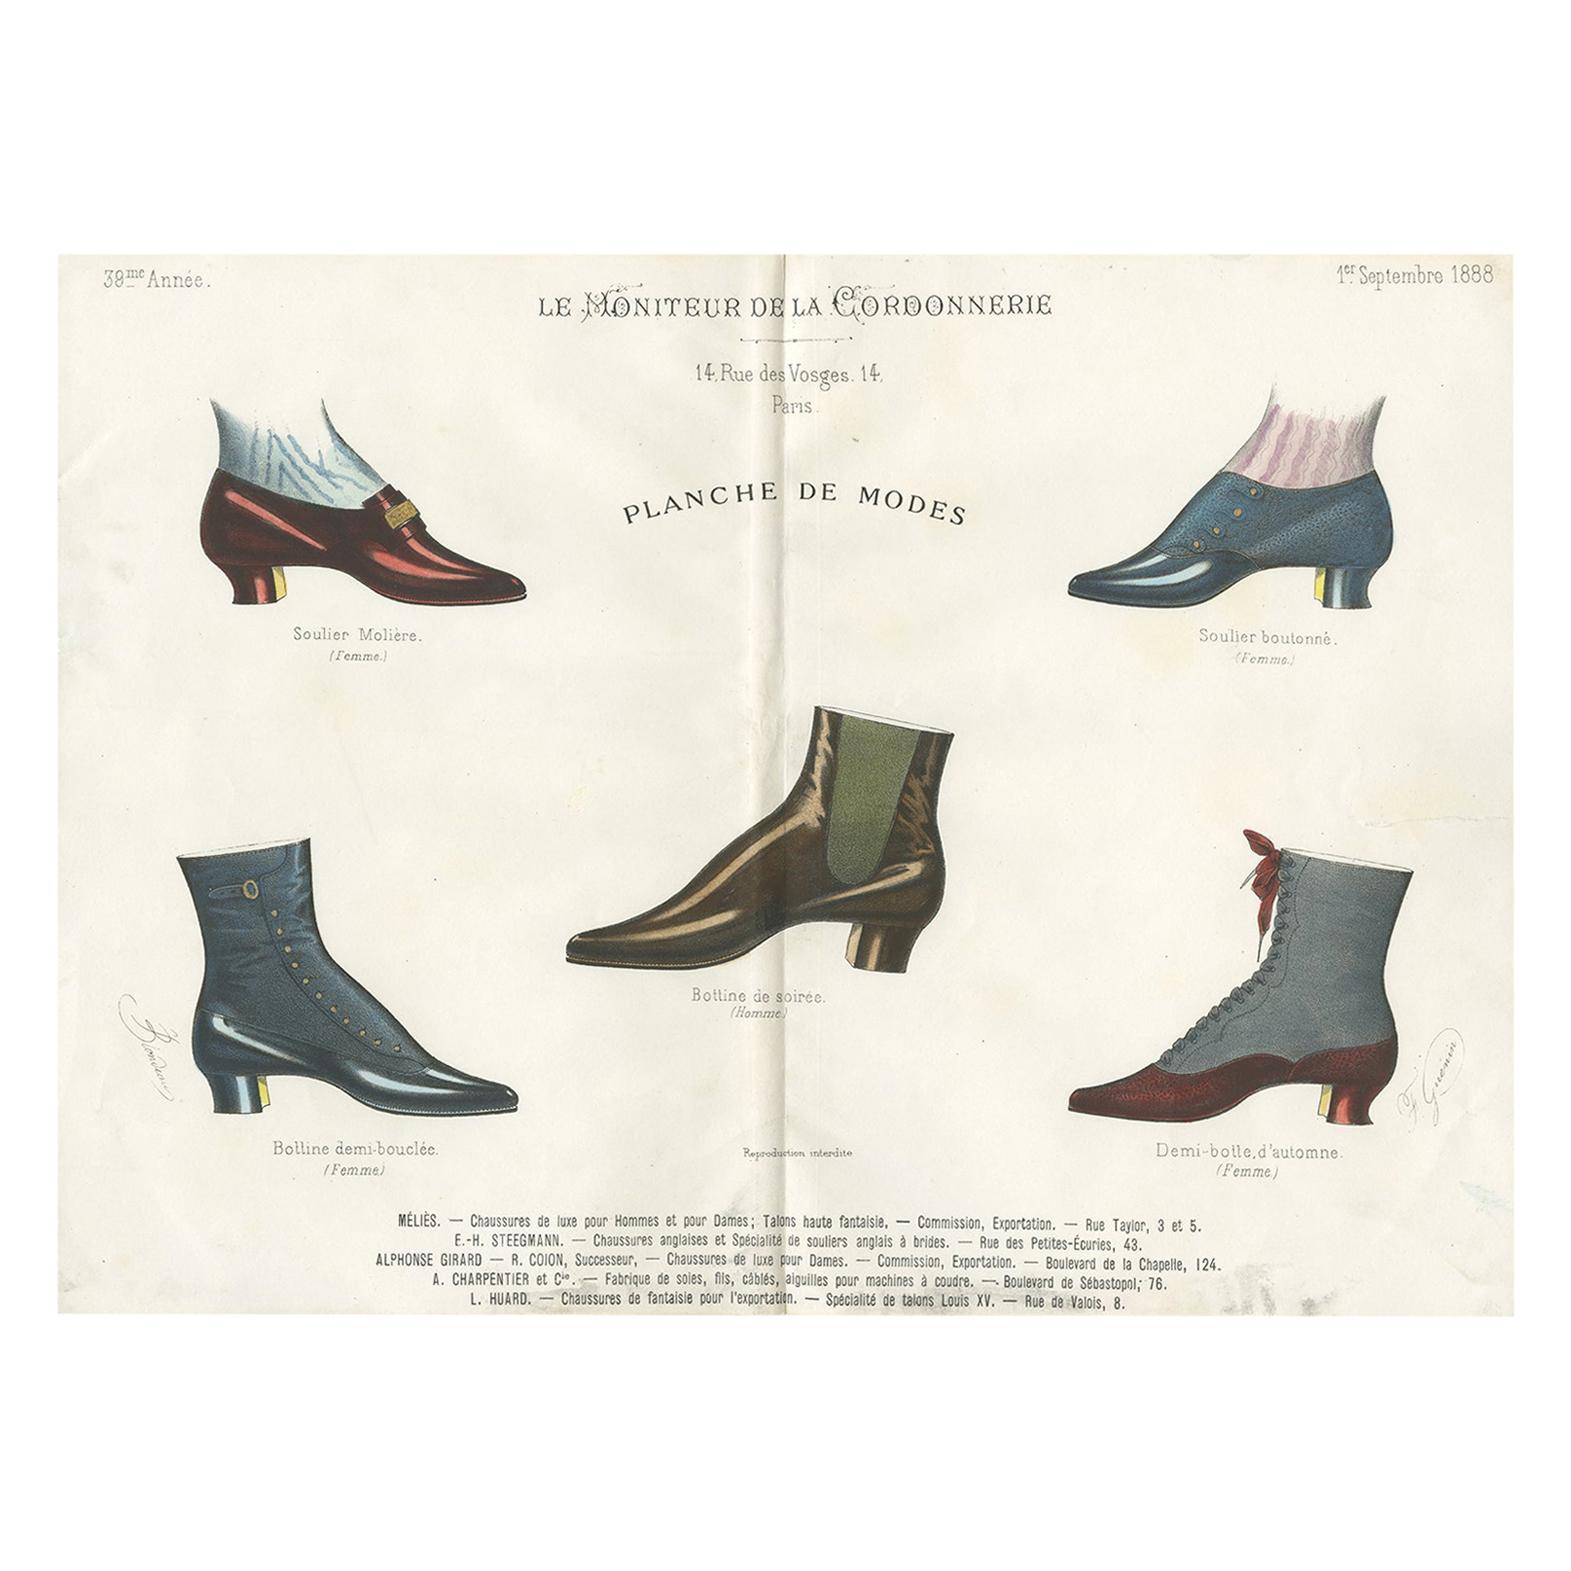 Antique Fashion Print of Shoe Designs Published in September, 1888